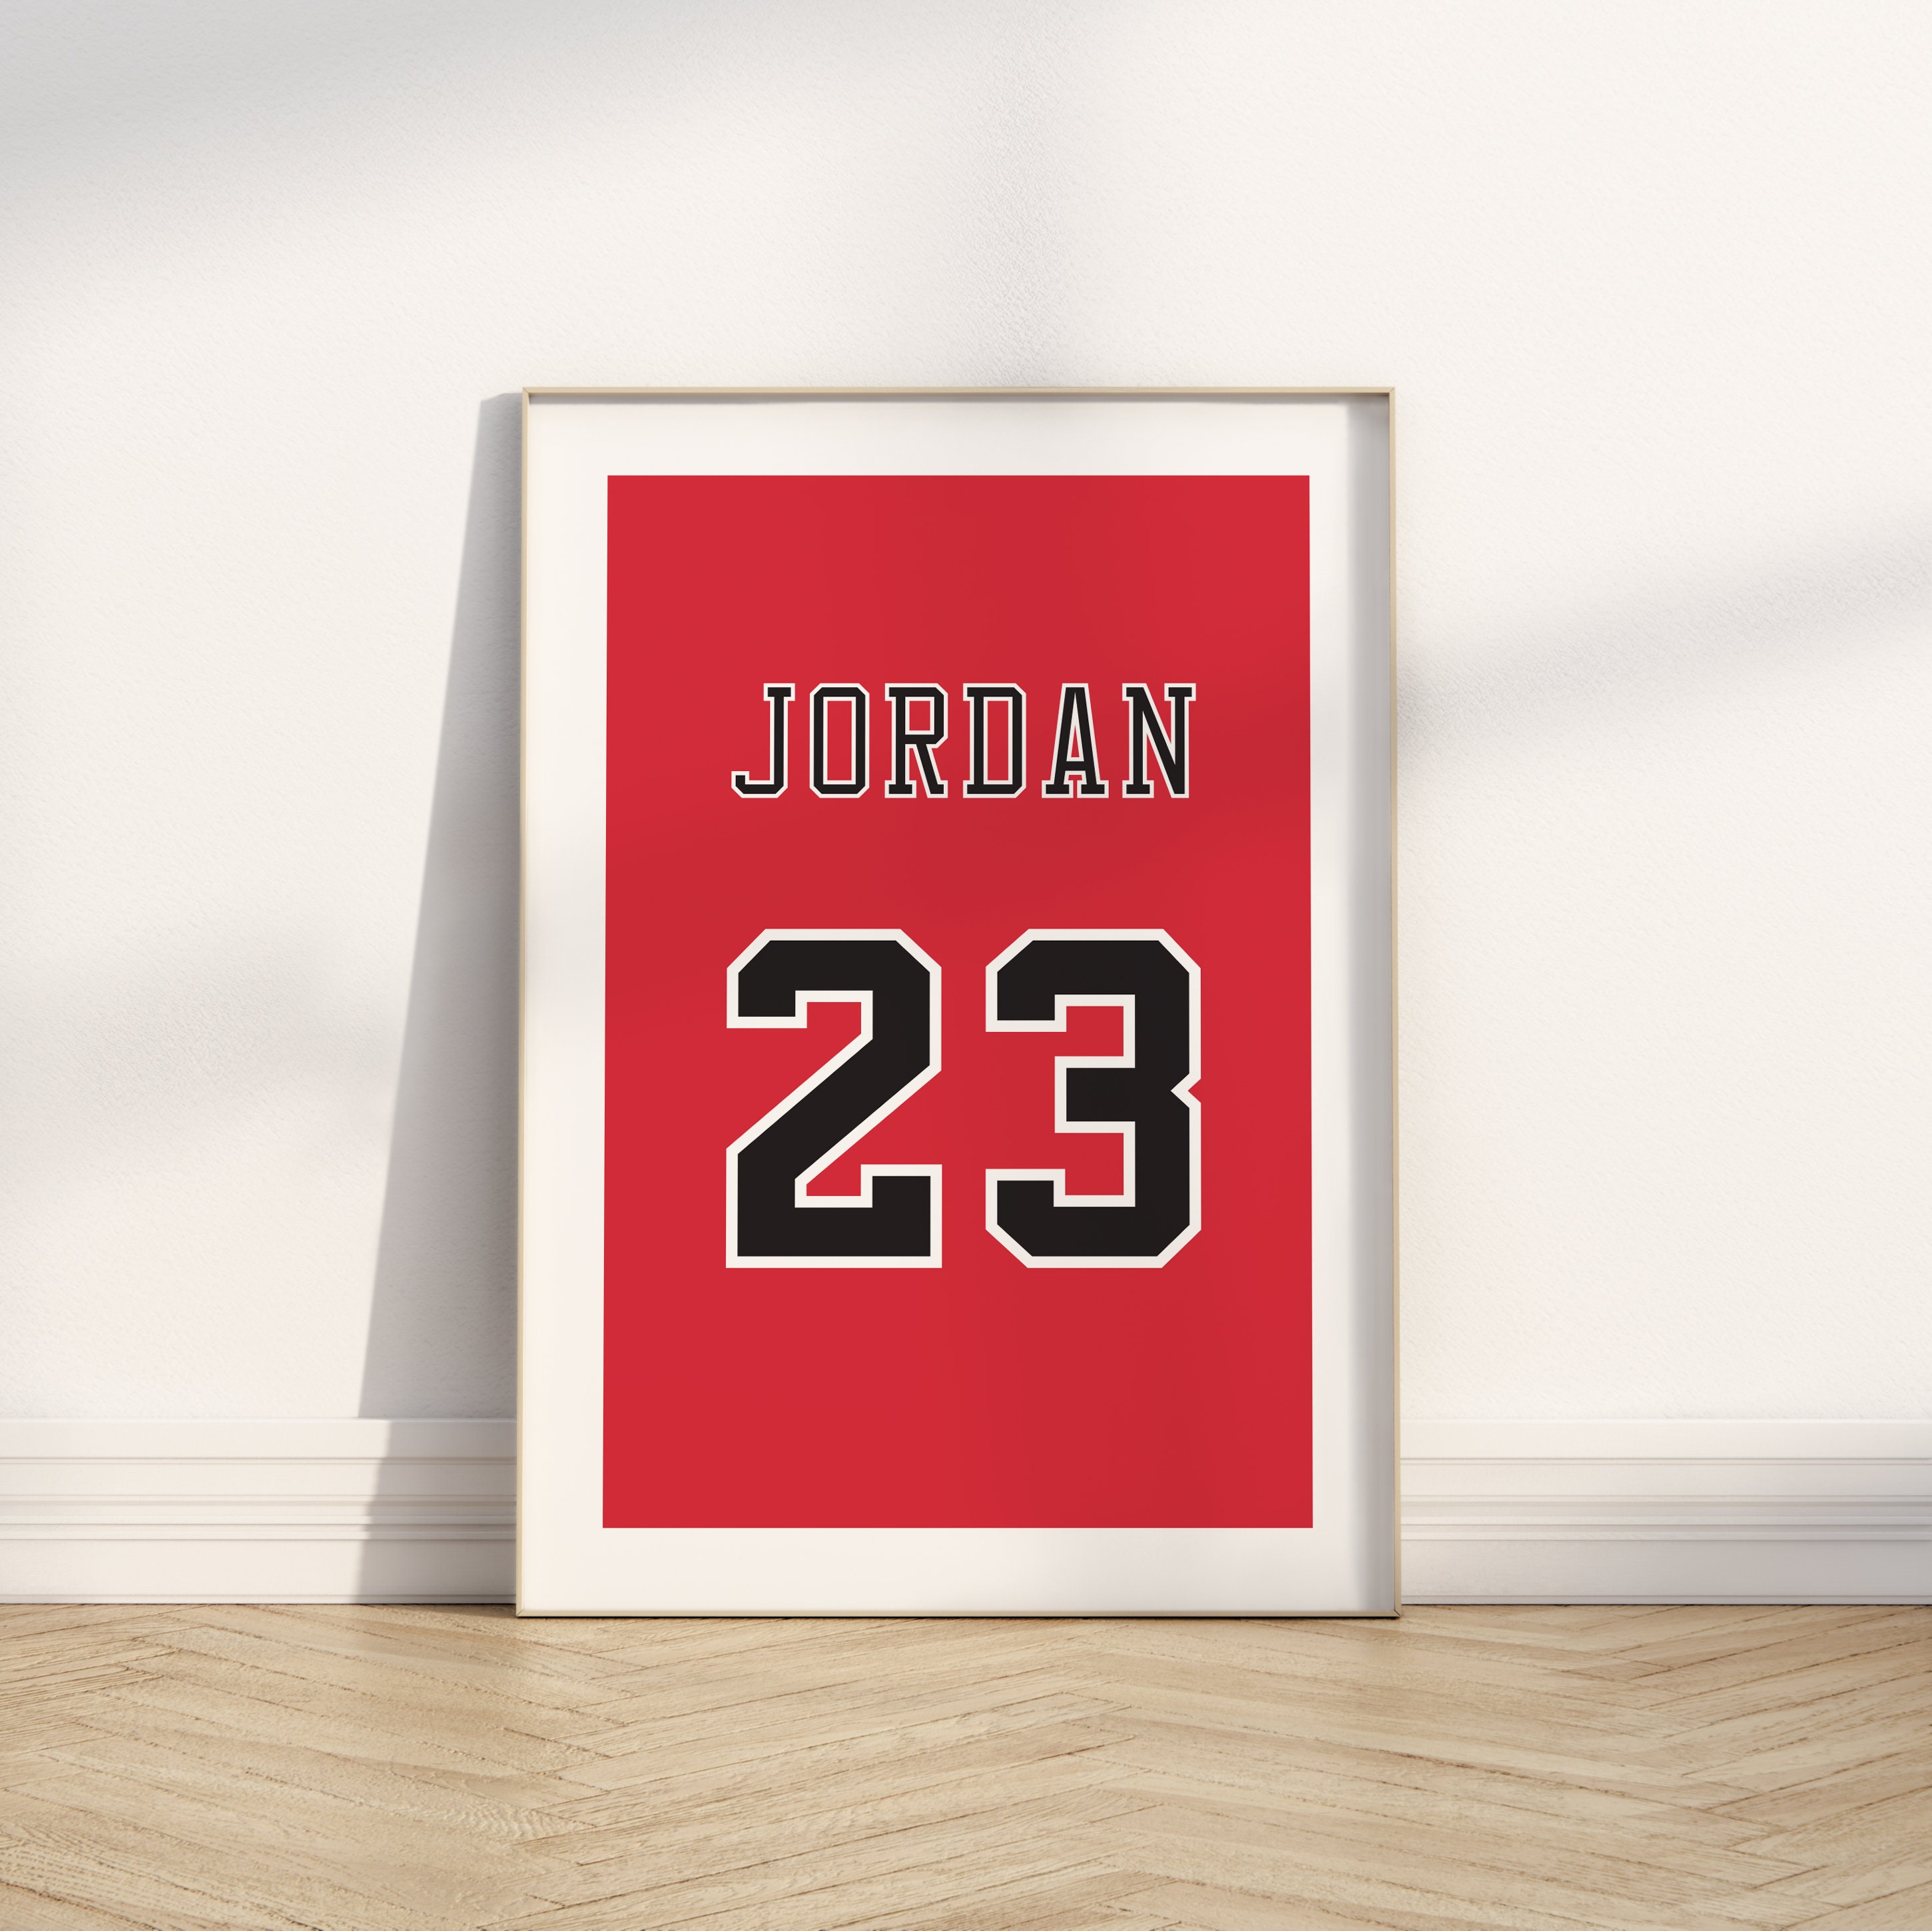 Michael Jordan Bulls 32x36 Custom Framed Jersey Display with 6